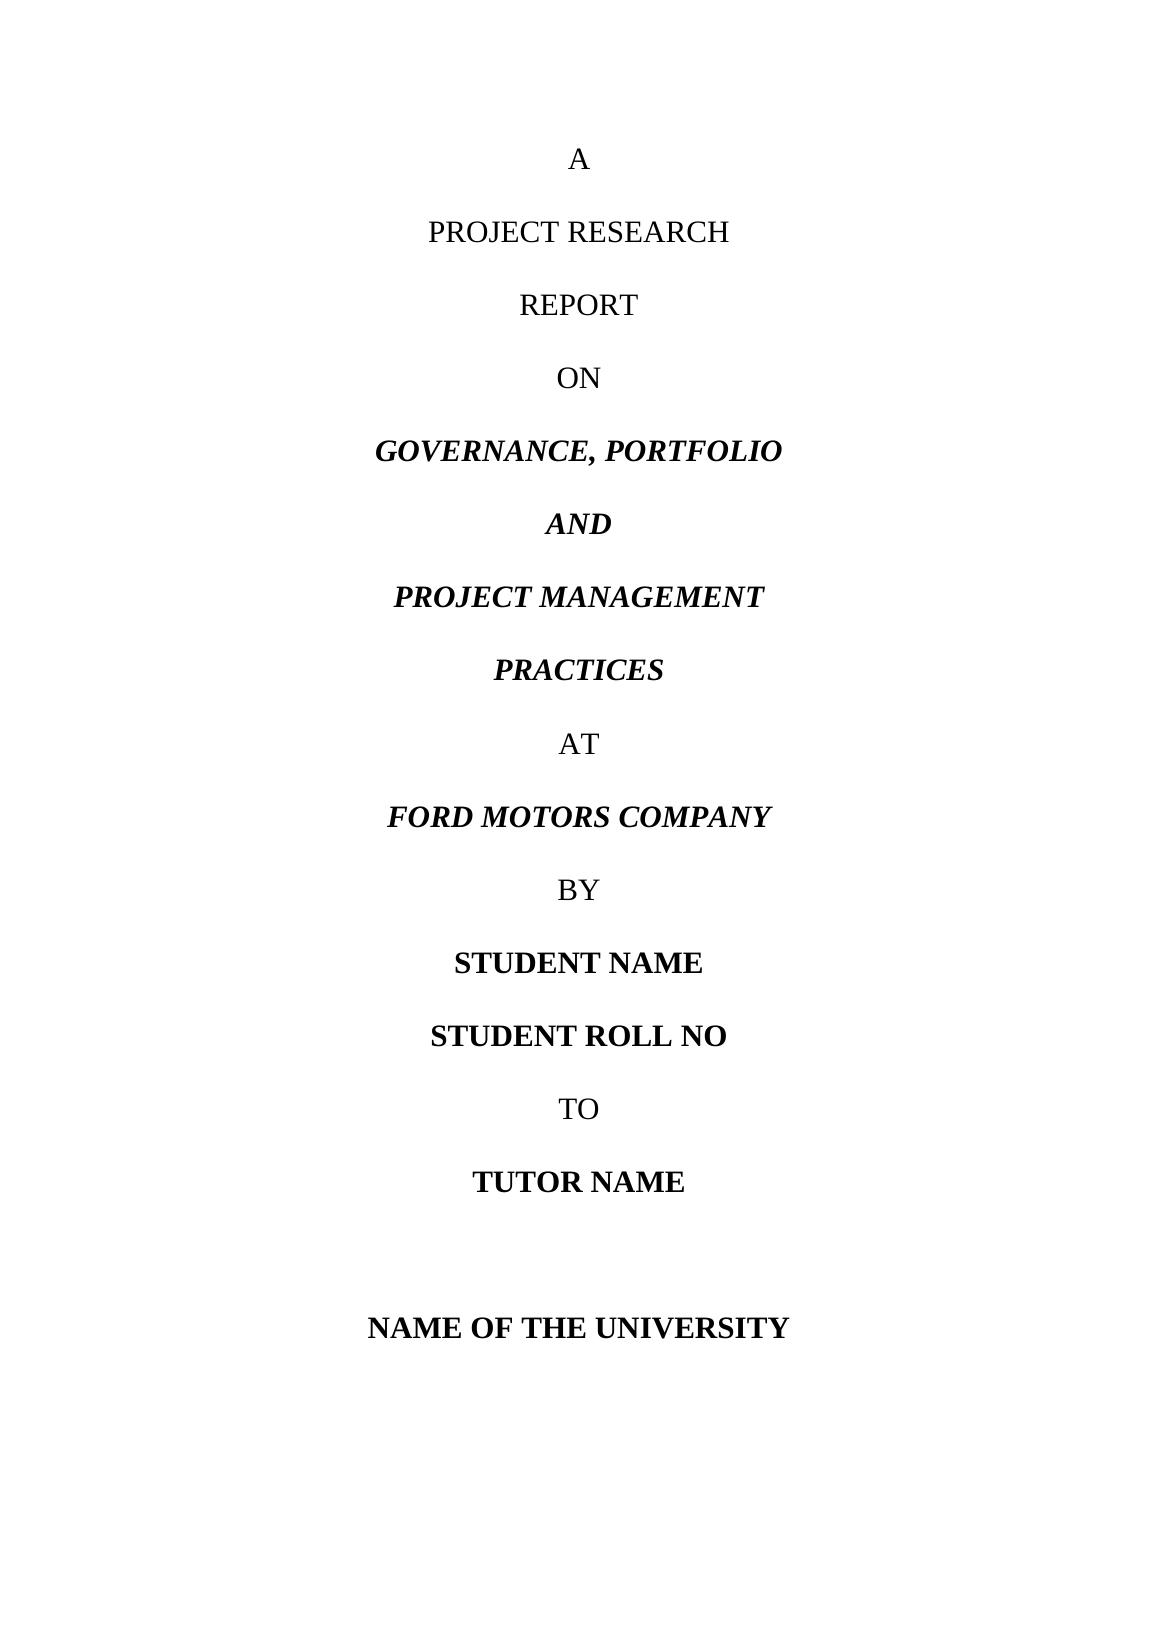 Governance Portfolio and Project Management Report 2022_1